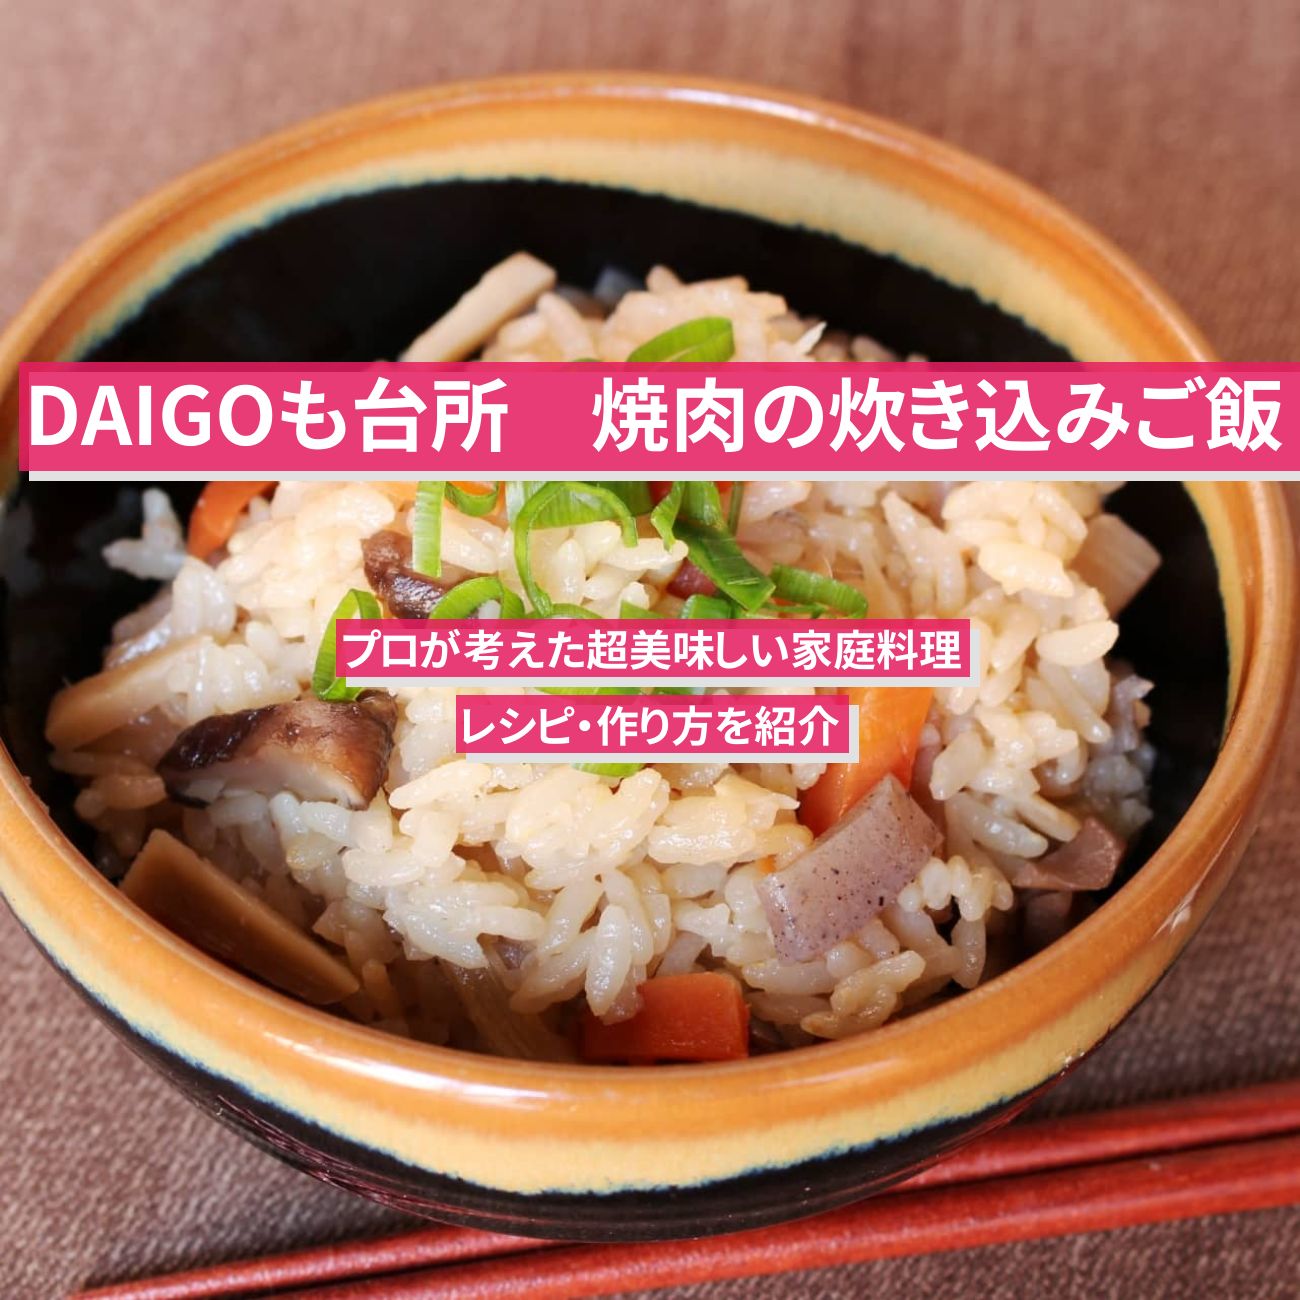 【DAIGOも台所】『焼肉の炊き込みご飯』のレシピ・作り方を紹介